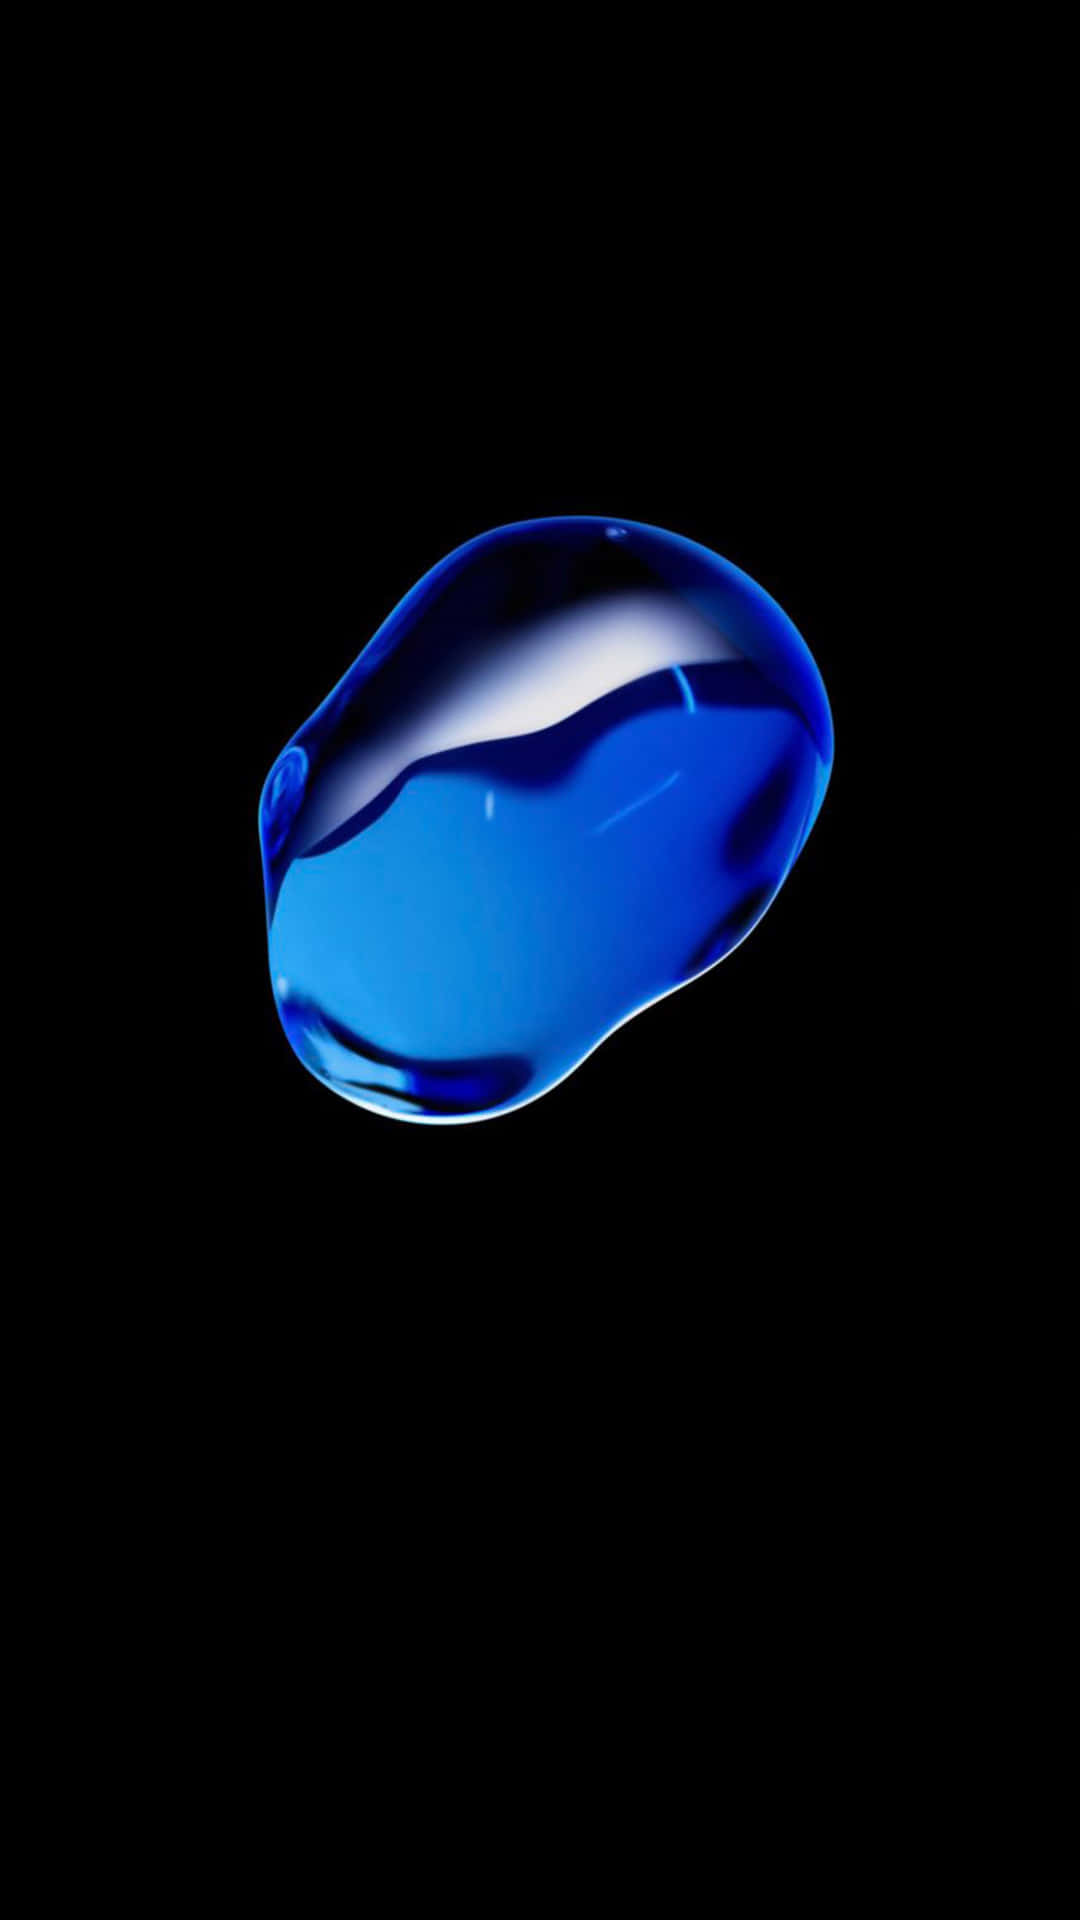 Unliquido Blu Su Una Superficie Nera Sfondo